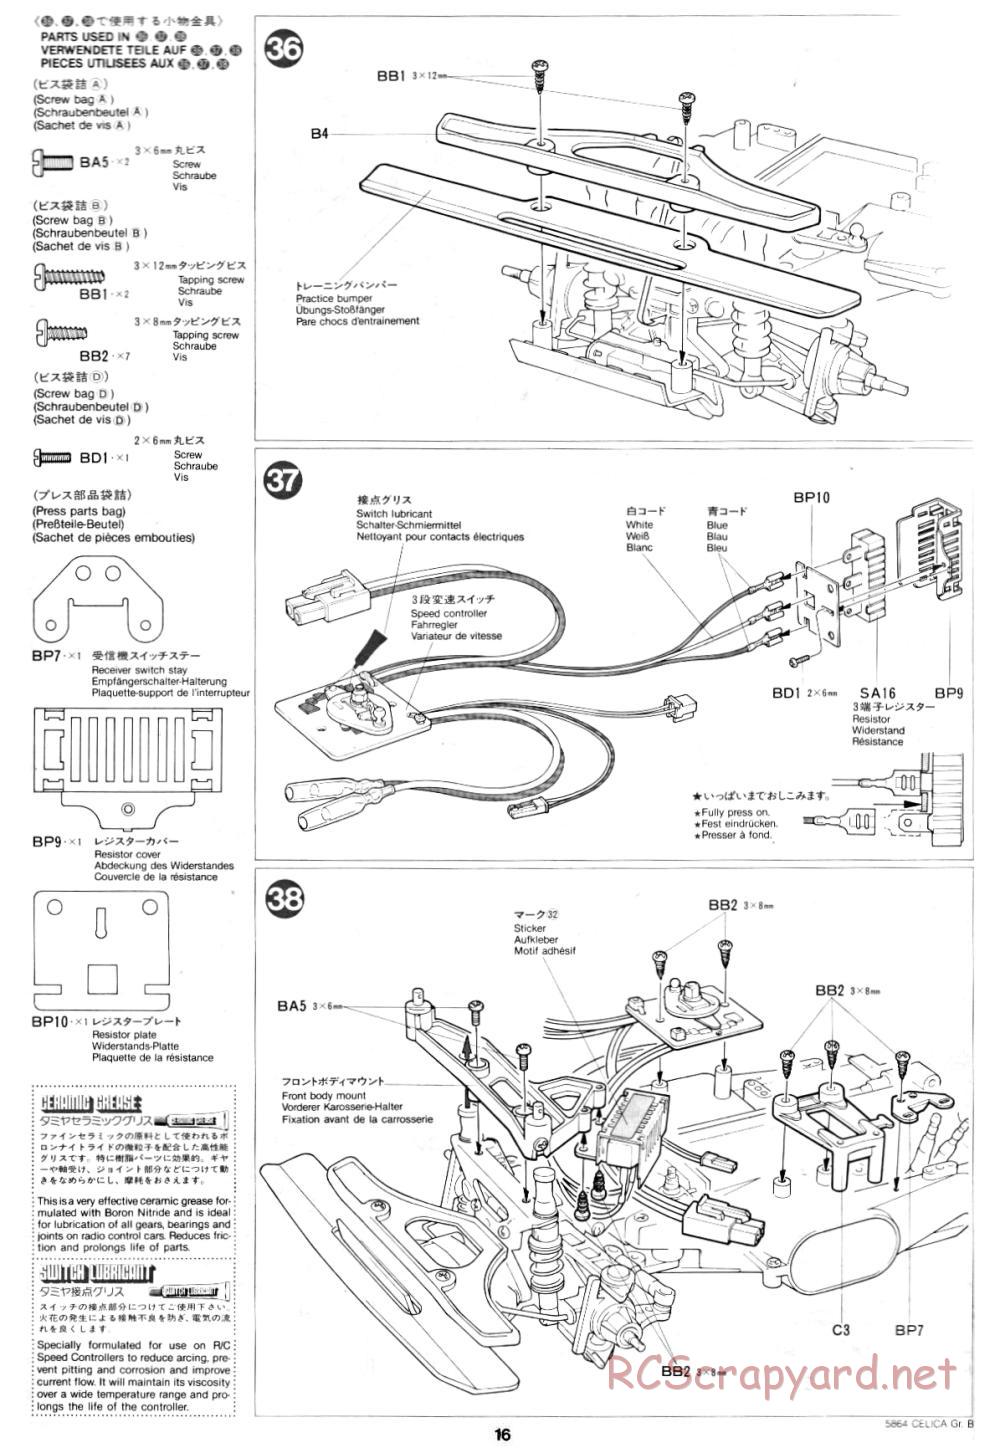 Tamiya - Toyota Celica Gr.B Rally Special - 58064 - Manual - Page 16